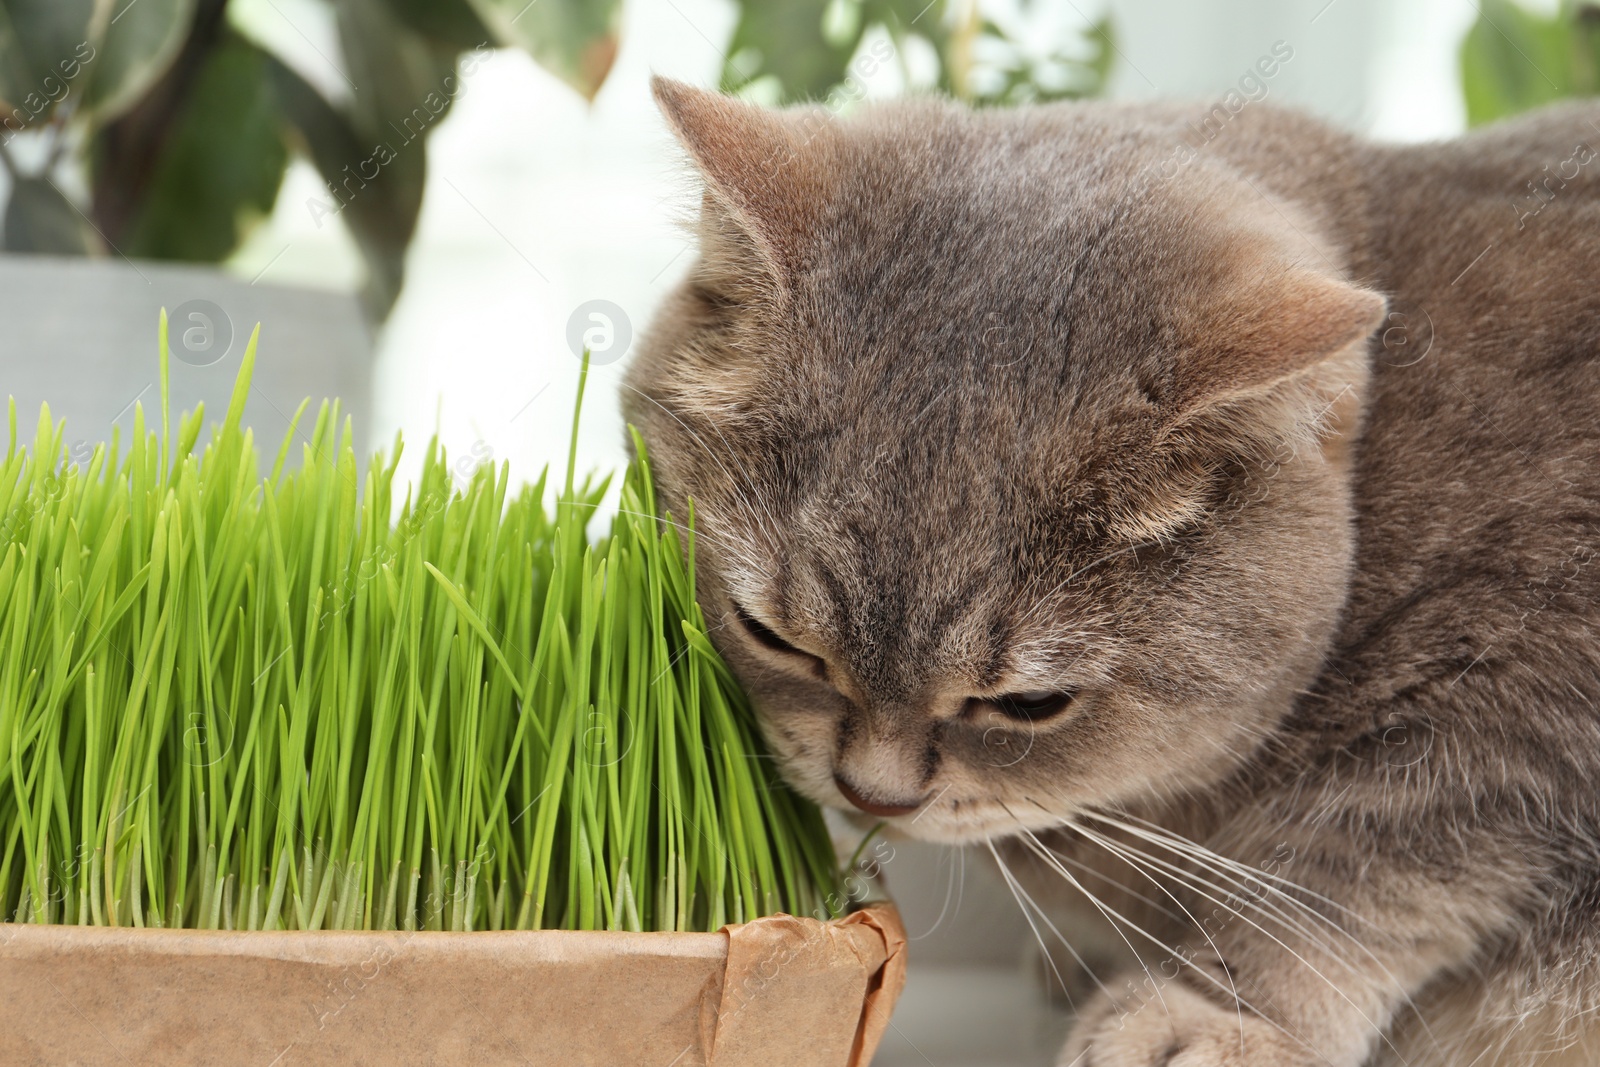 Photo of Cute cat near fresh green grass indoors, closeup